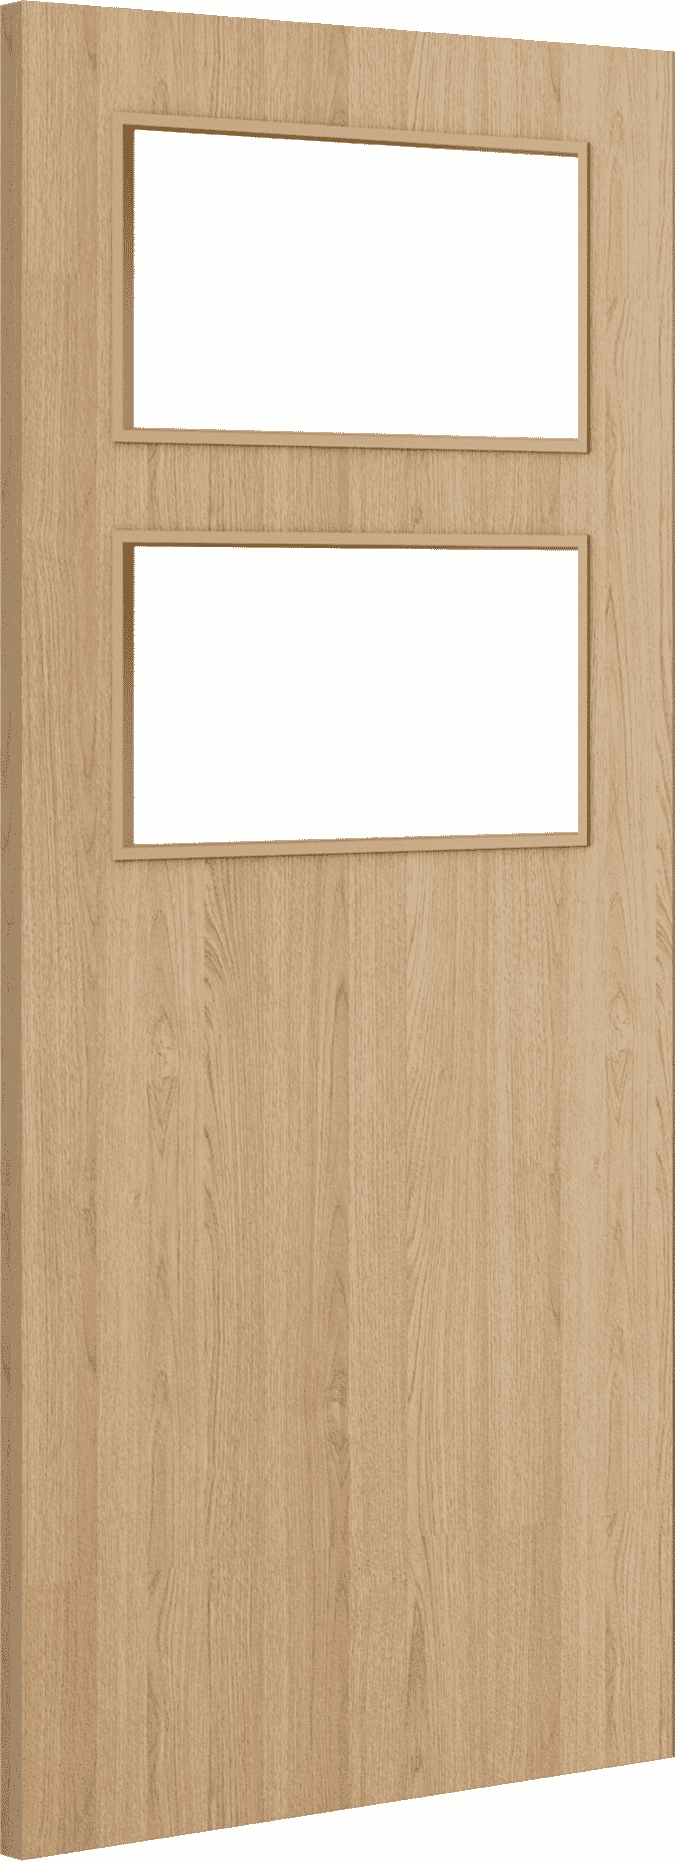 1981mm x 762mm x 44mm (30") Architectural Oak 02 Frosted Glazed - Prefinished FD30 Fire Door Blank